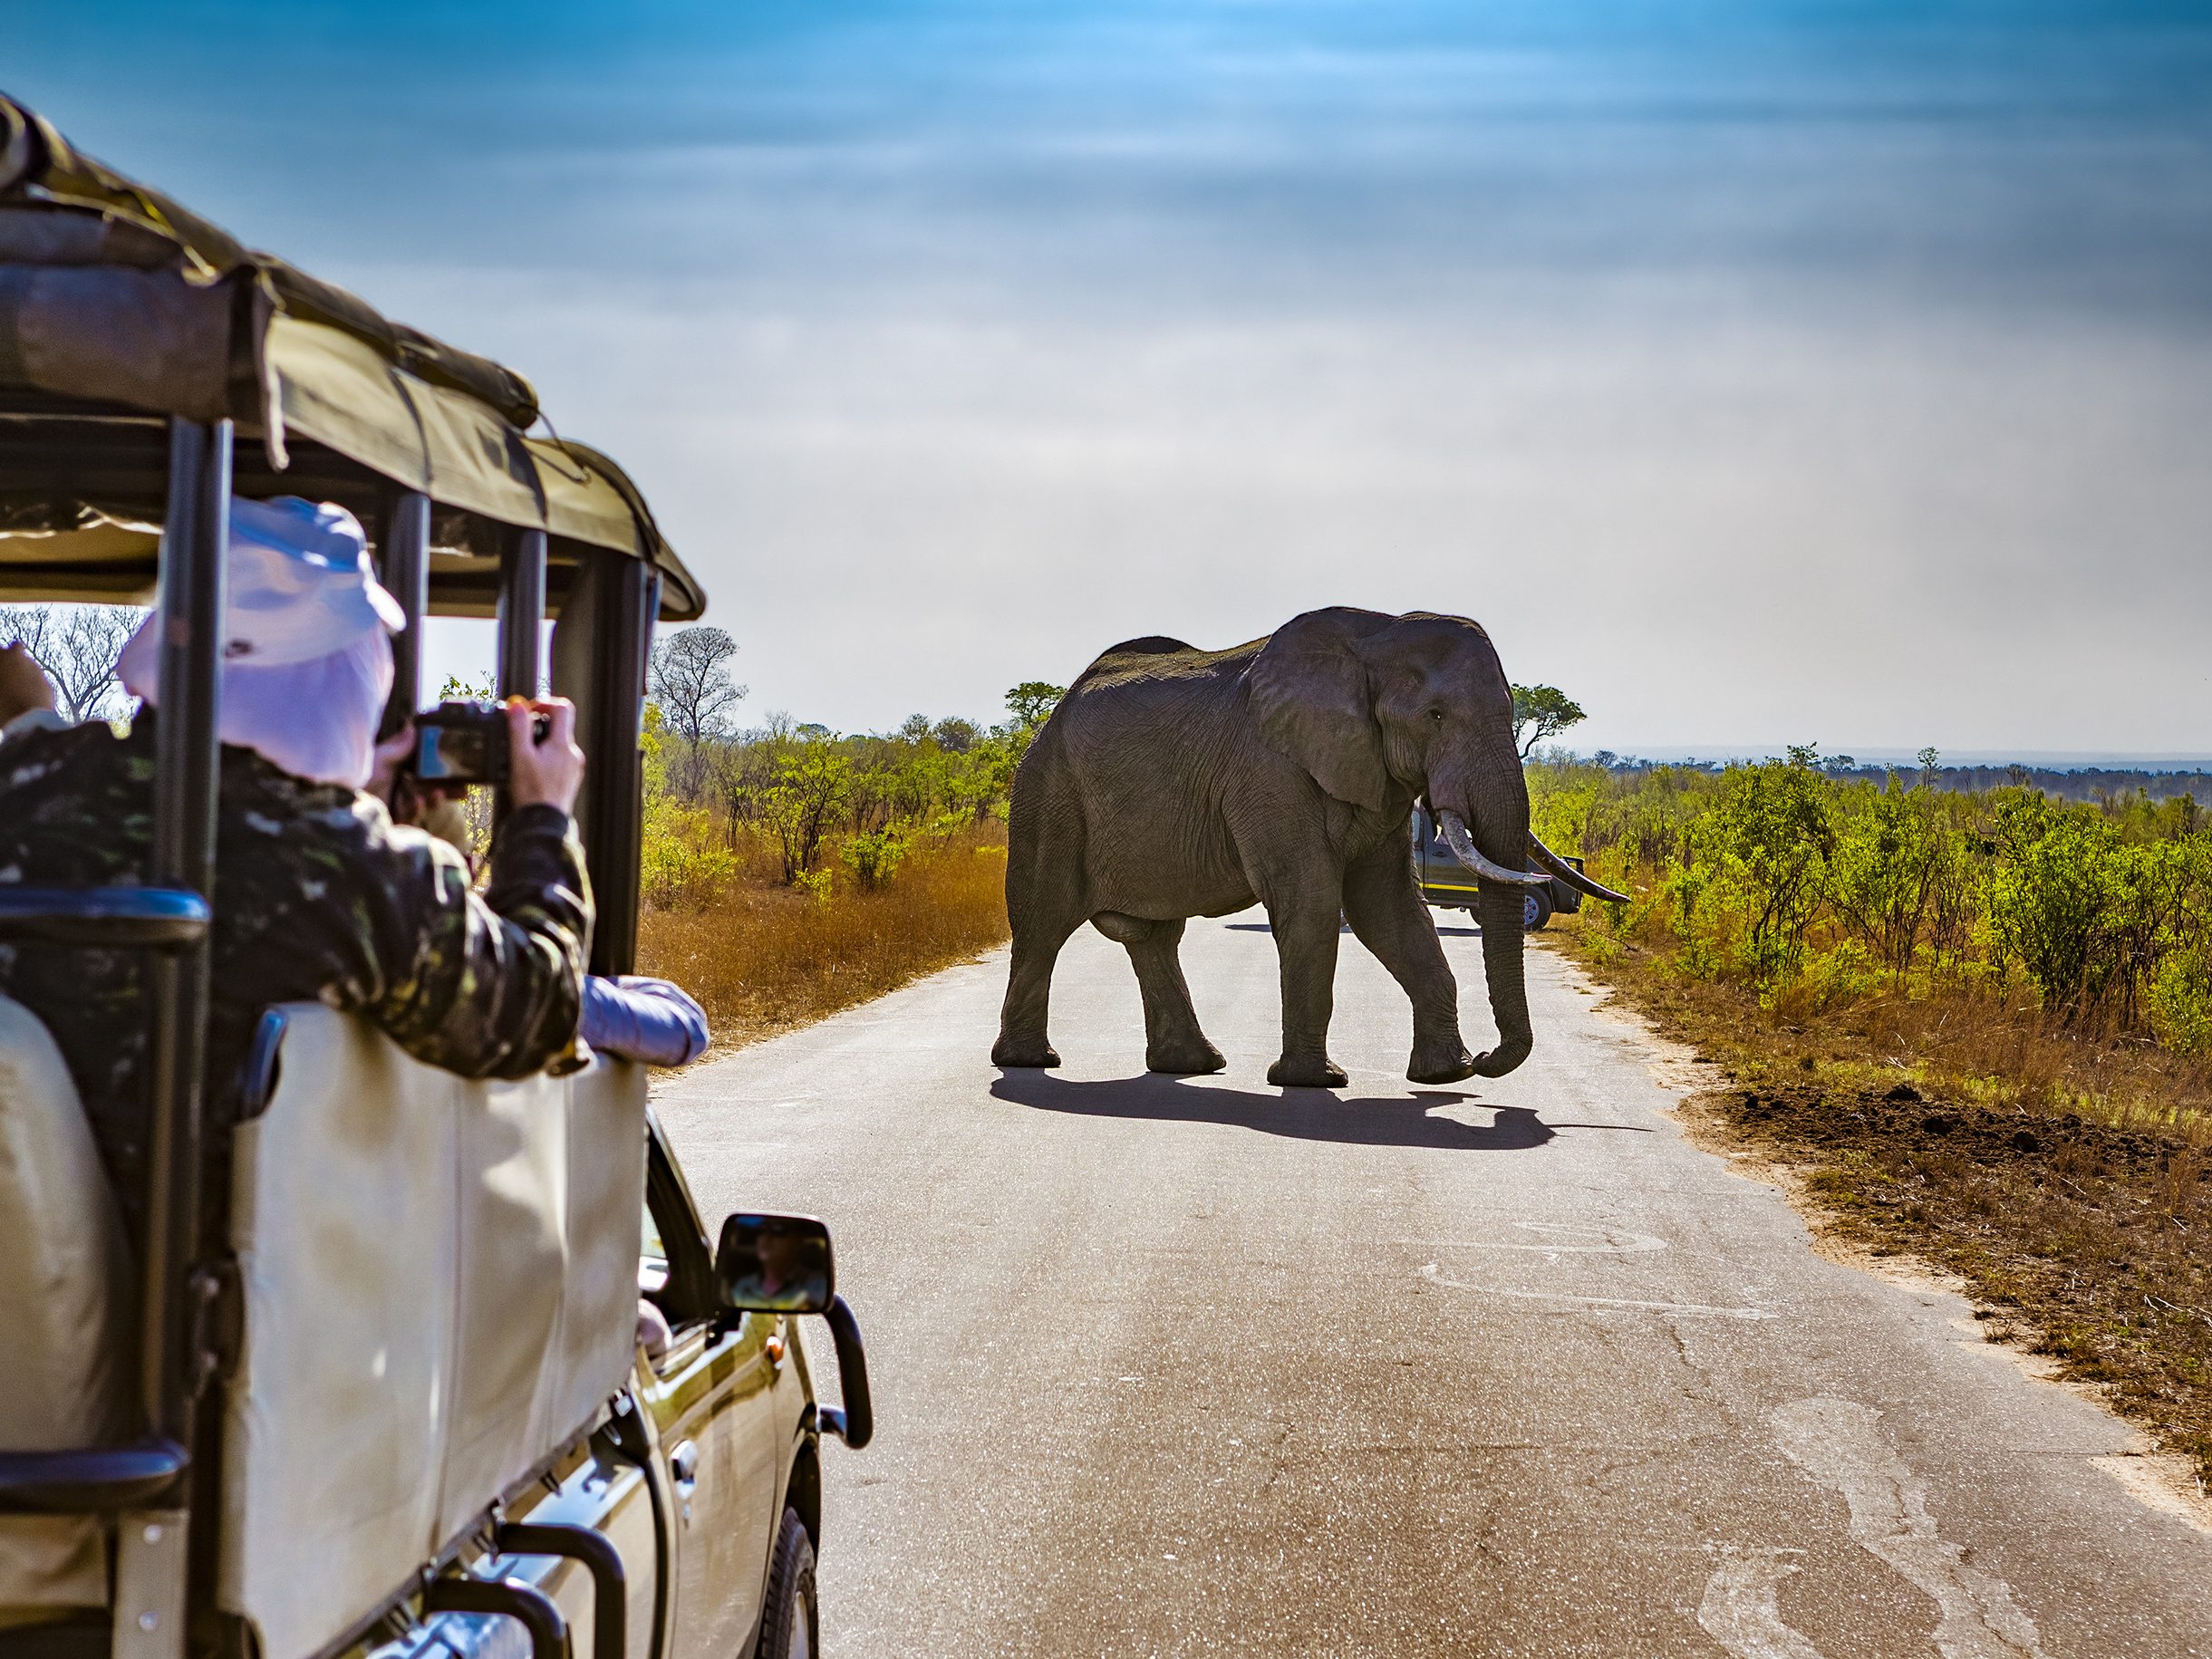 zuid afrika vakantie safari